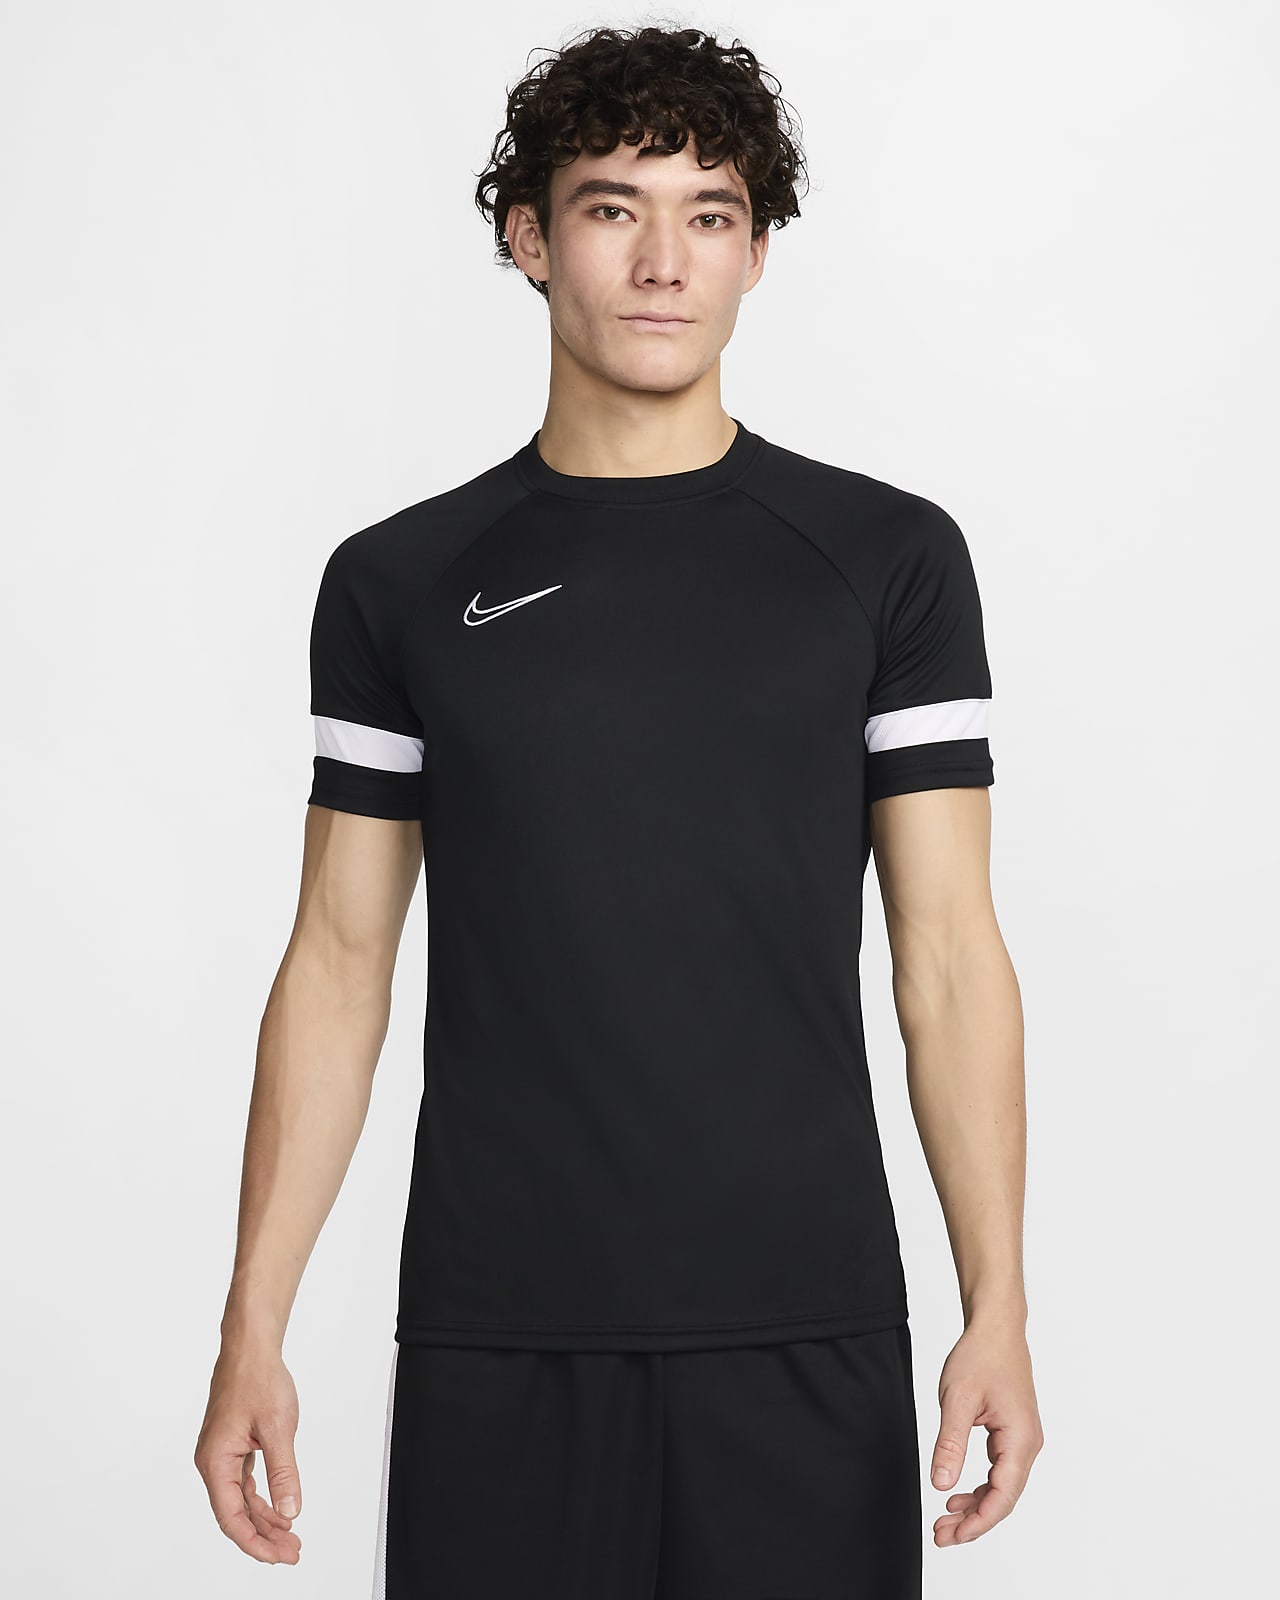 Men\'s ID Nike Academy Dri-FIT Top. Nike Short-Sleeve Football